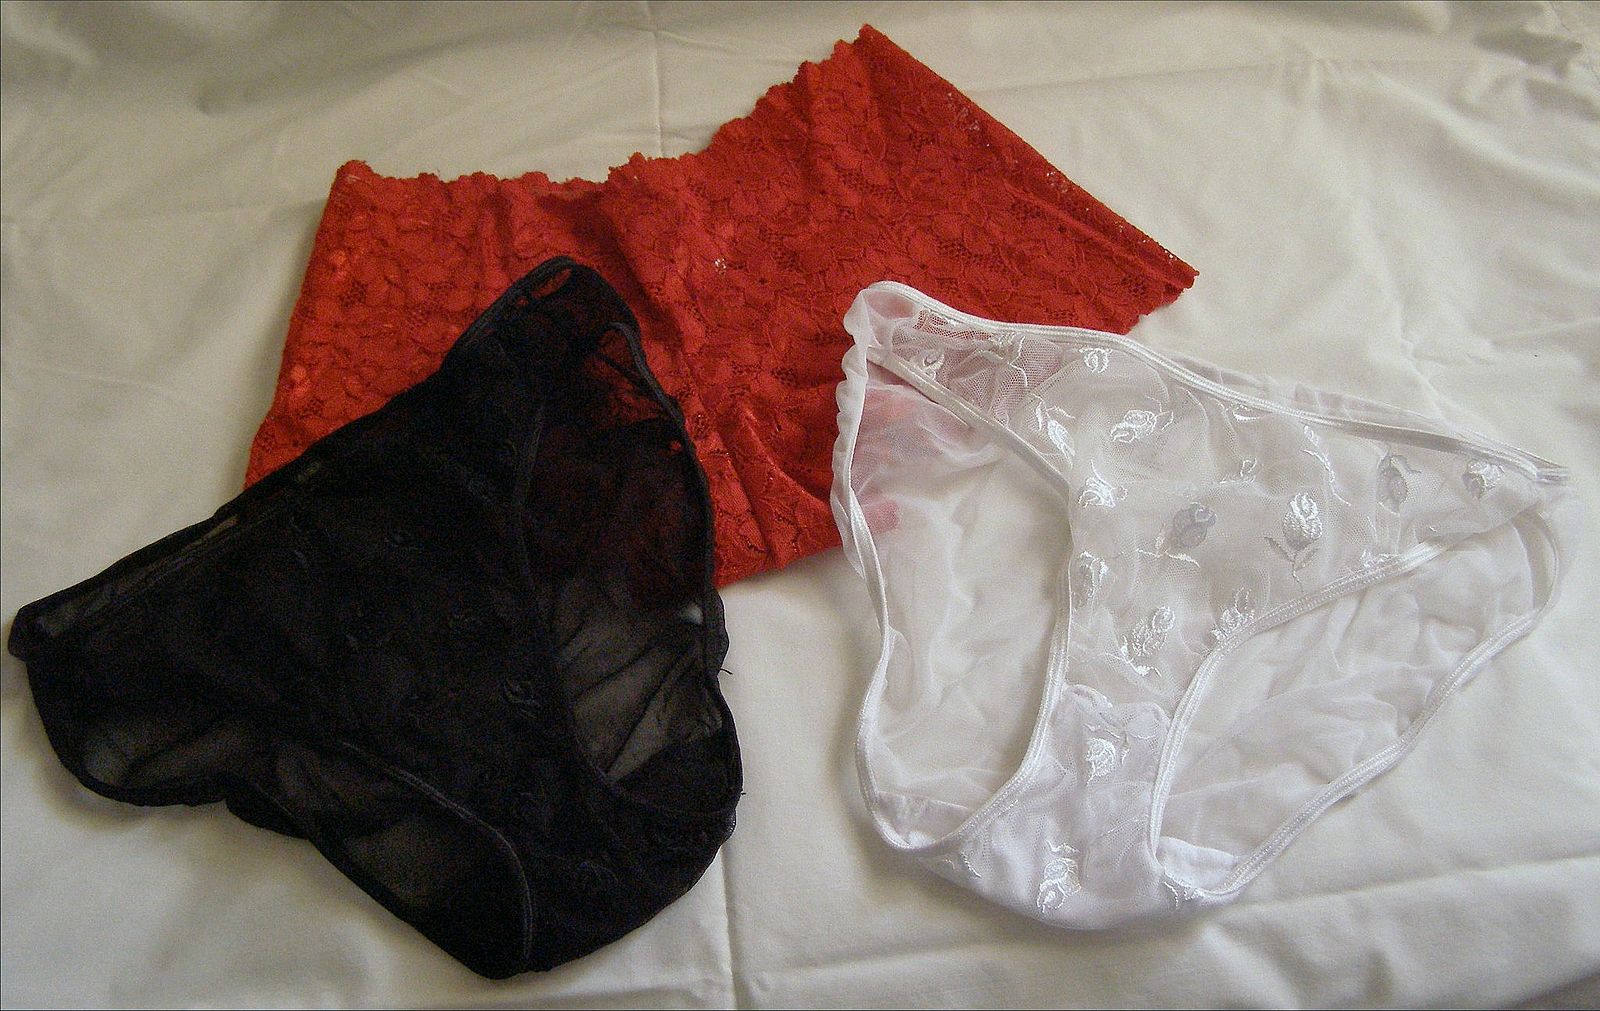 Woman Buys USED Underwear To Seduce Husband